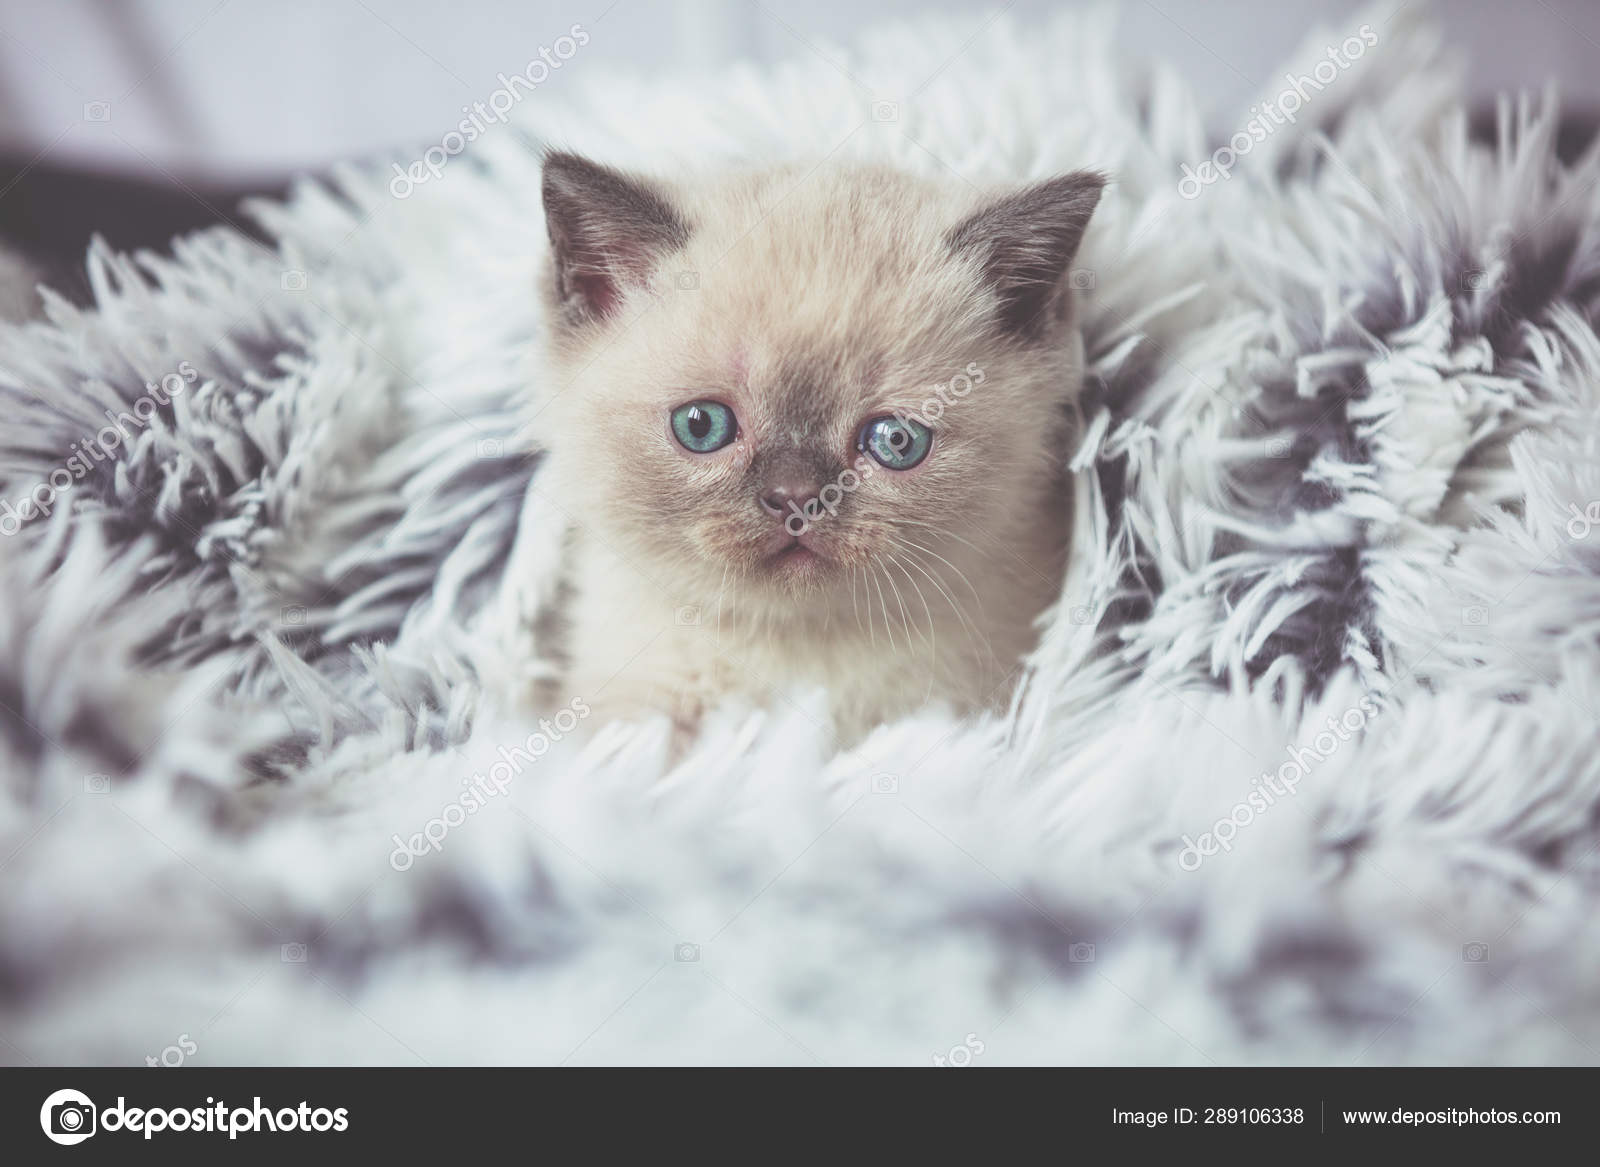 Cute Little Kitten Peeking Out Soft Fur Blue Blanket Stock Photo C Vvvita 289106338